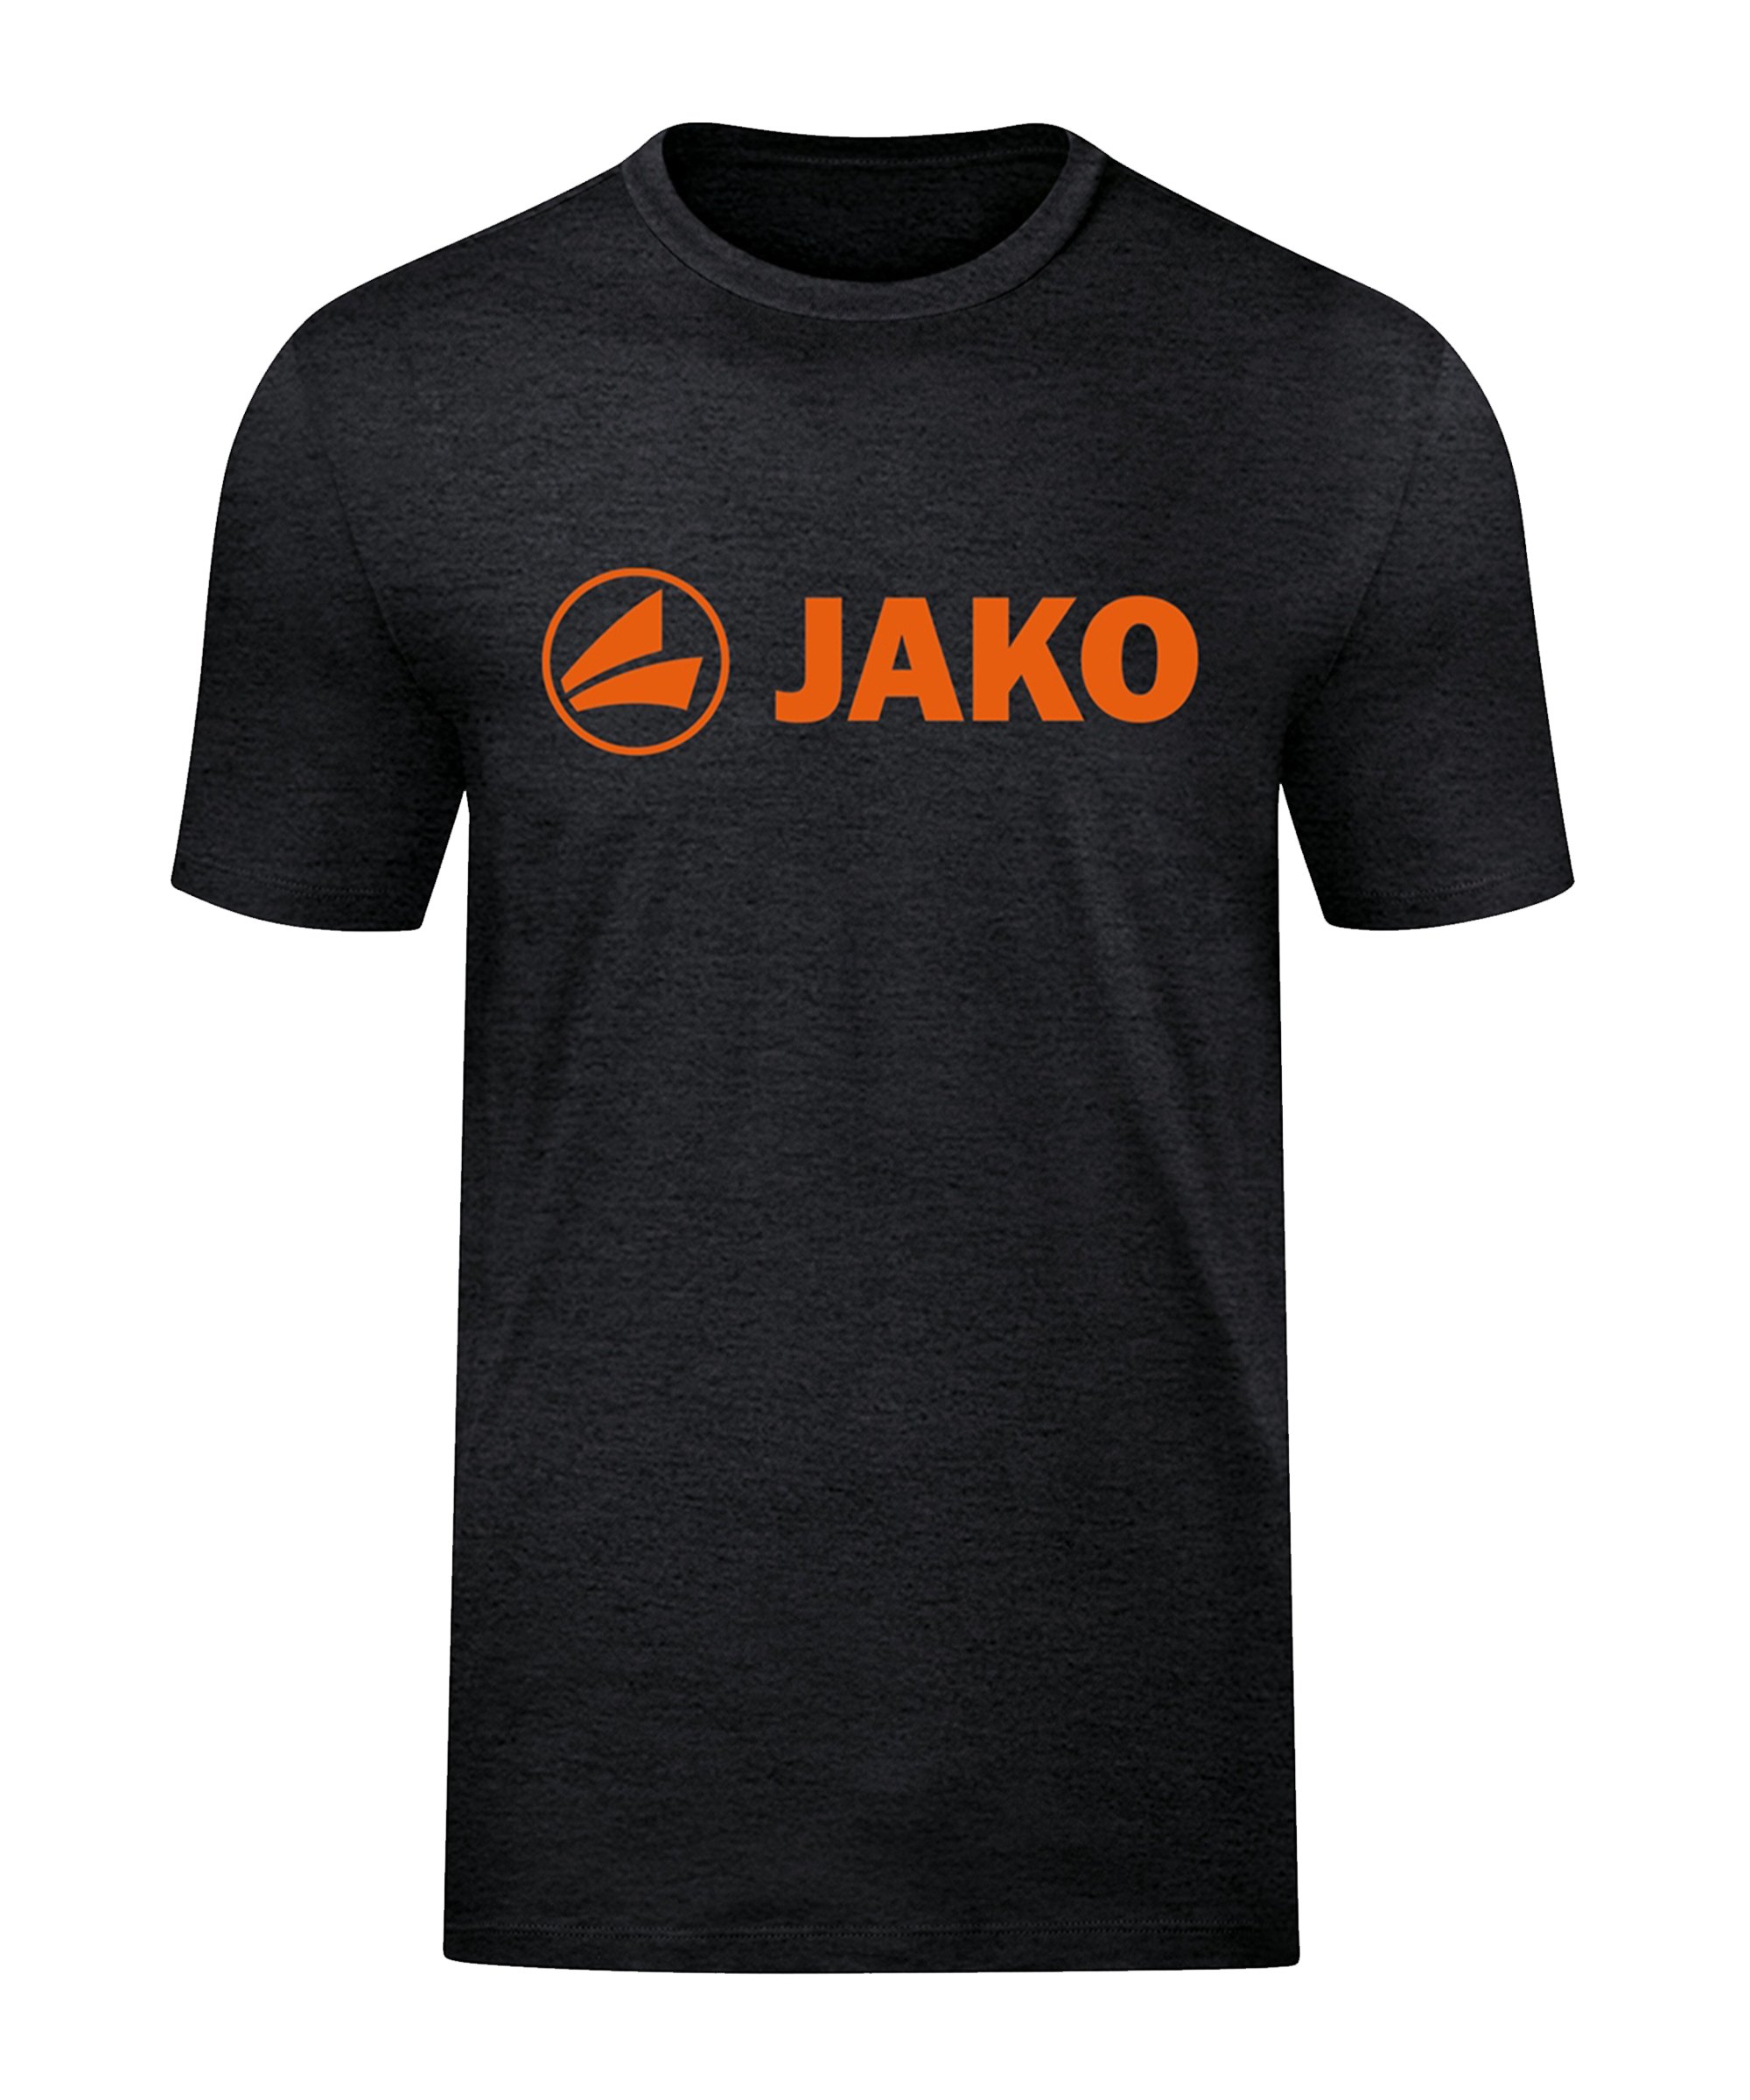 JAKO Promo T-Shirt Schwarz Orange F506 - schwarz